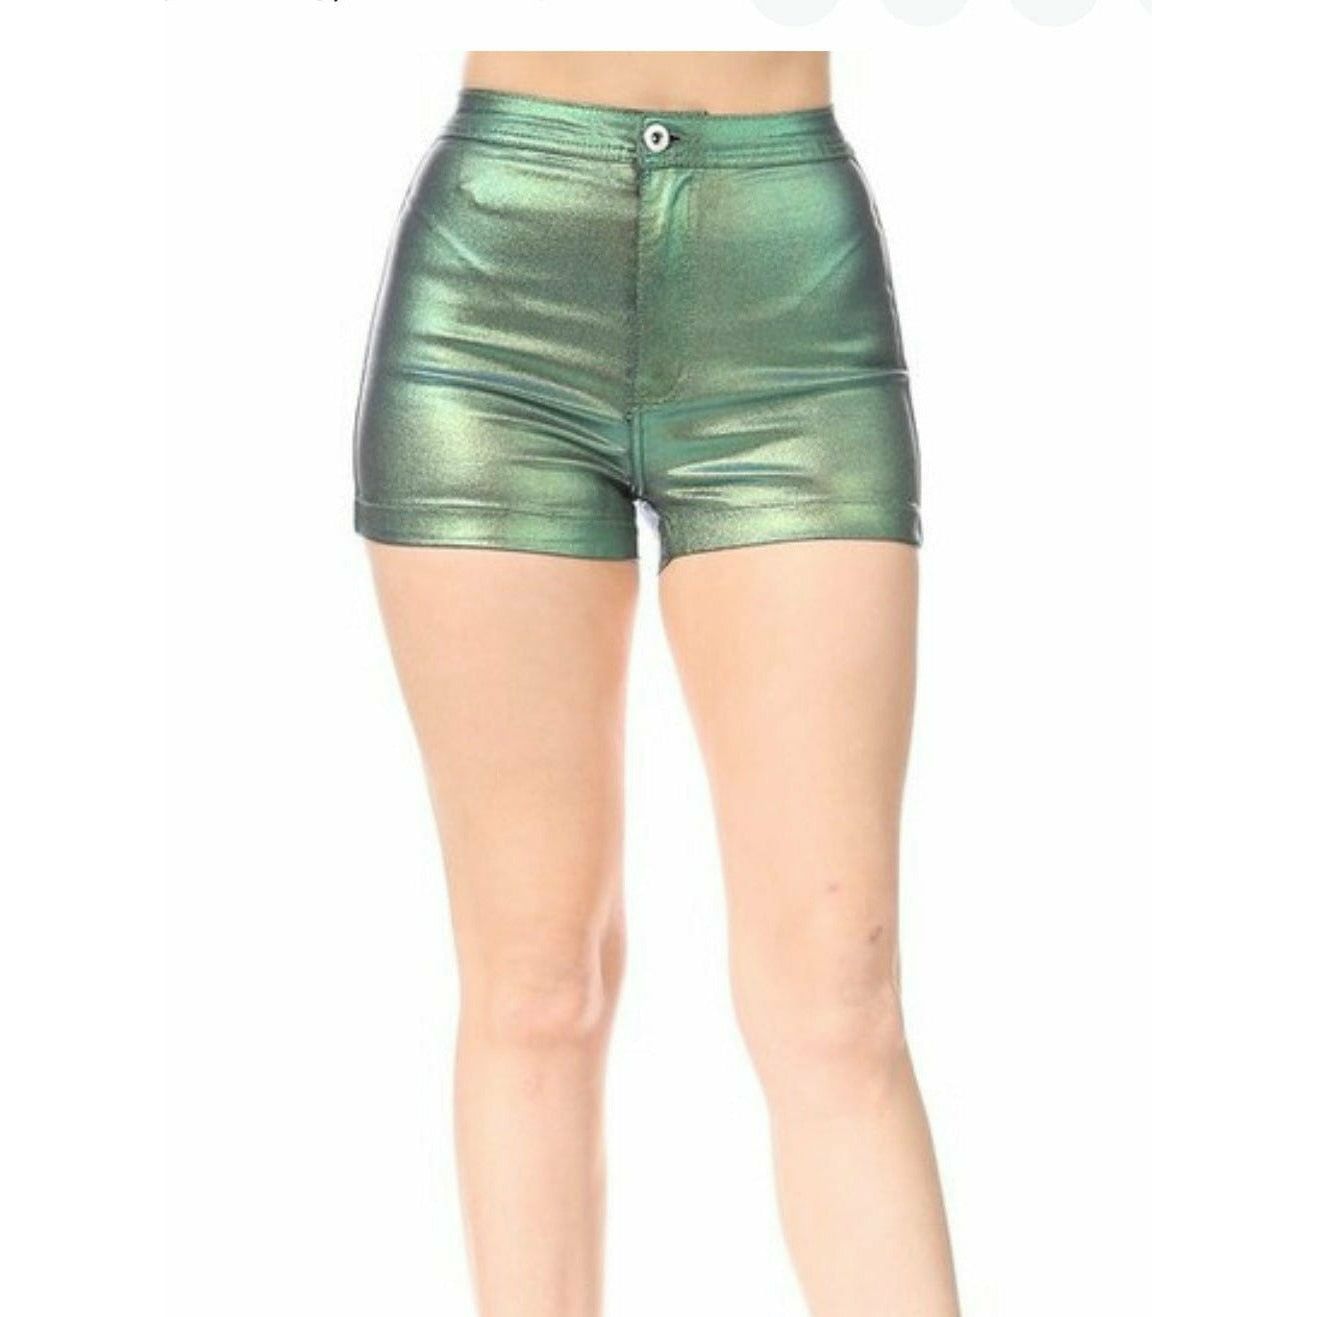 Green Iridescent Shorts